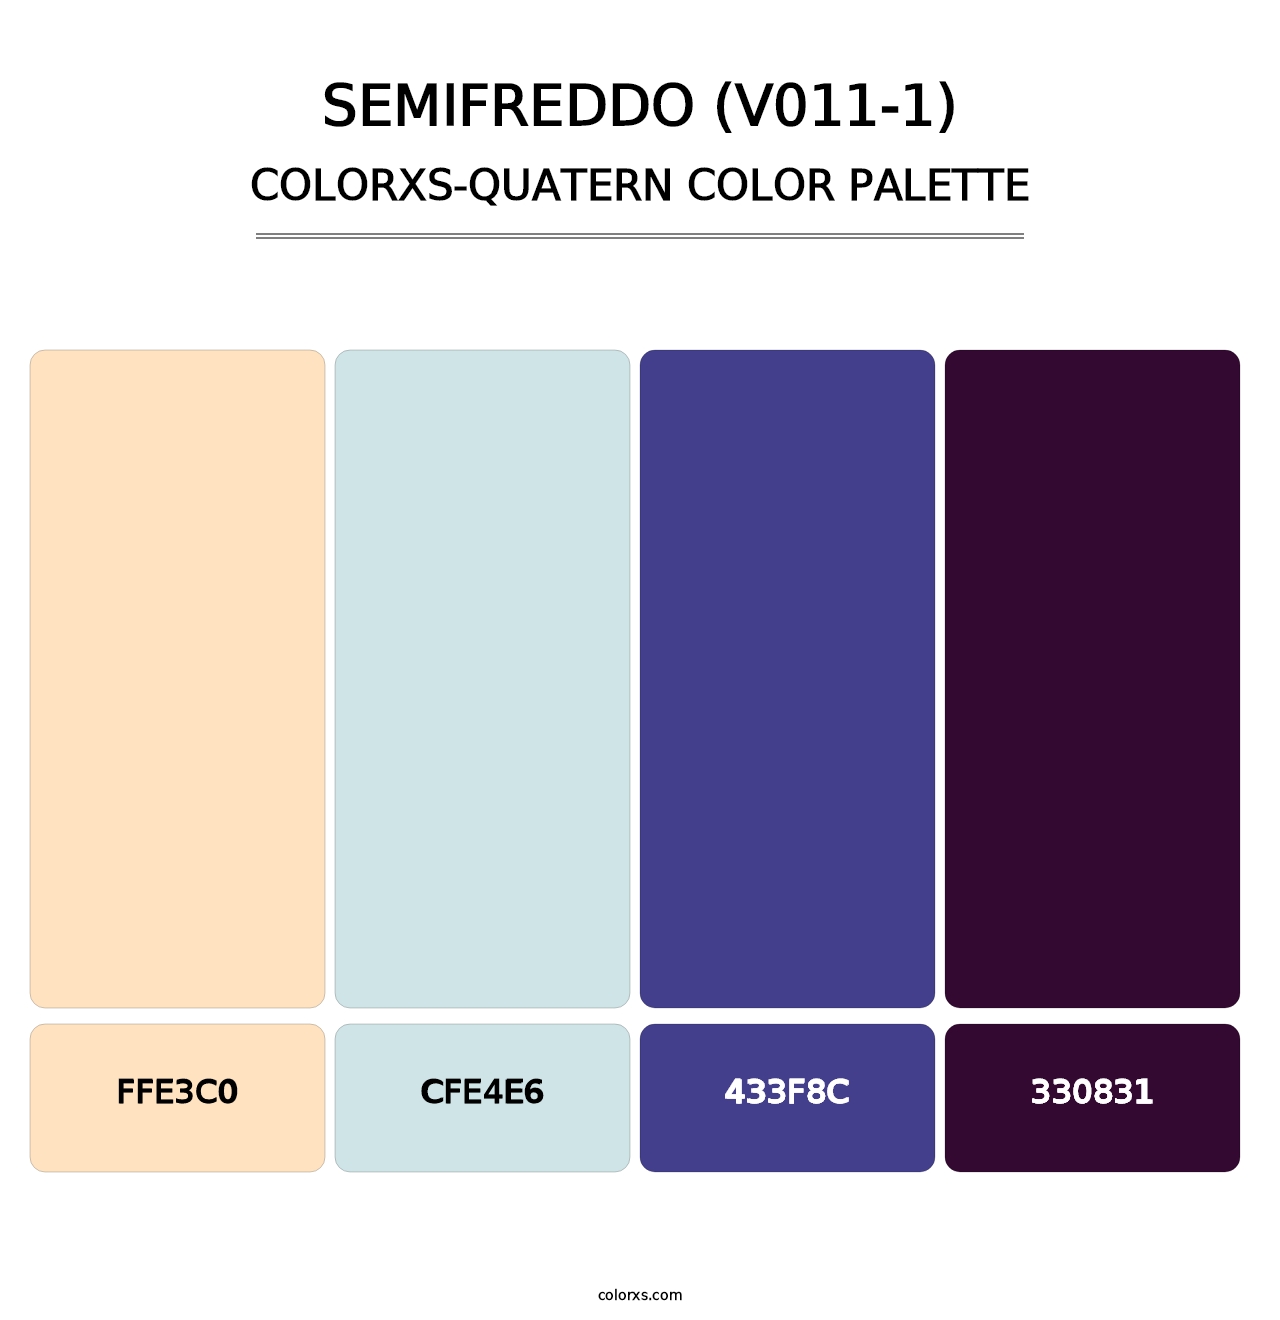 Semifreddo (V011-1) - Colorxs Quatern Palette